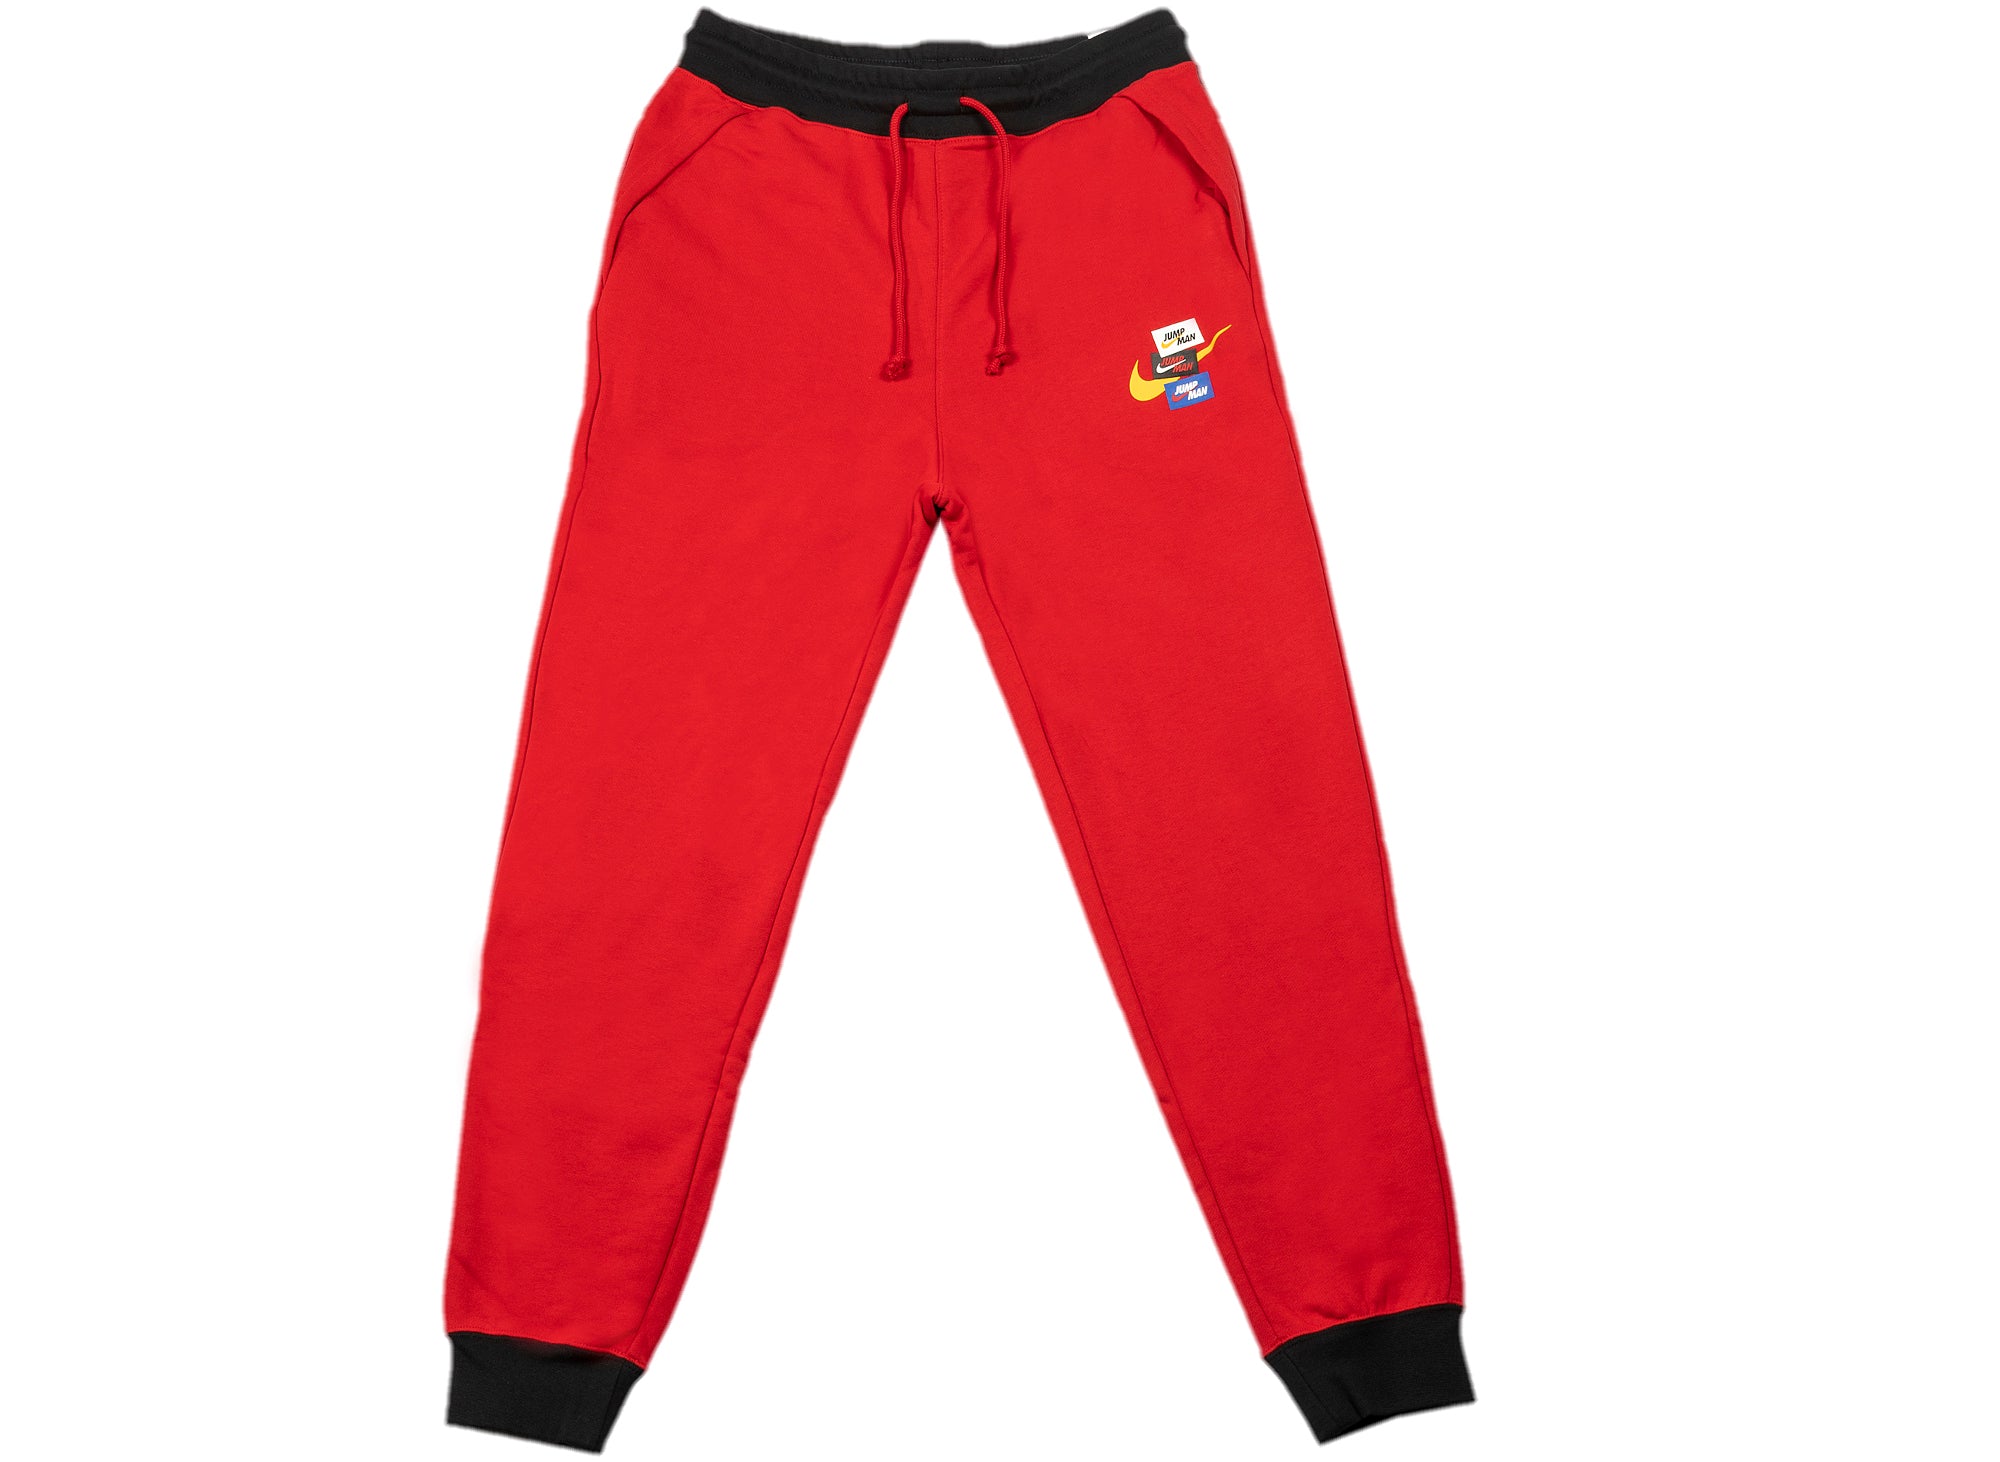 Jogging bottoms Nike Jordan Red for Men - DQ7340-687